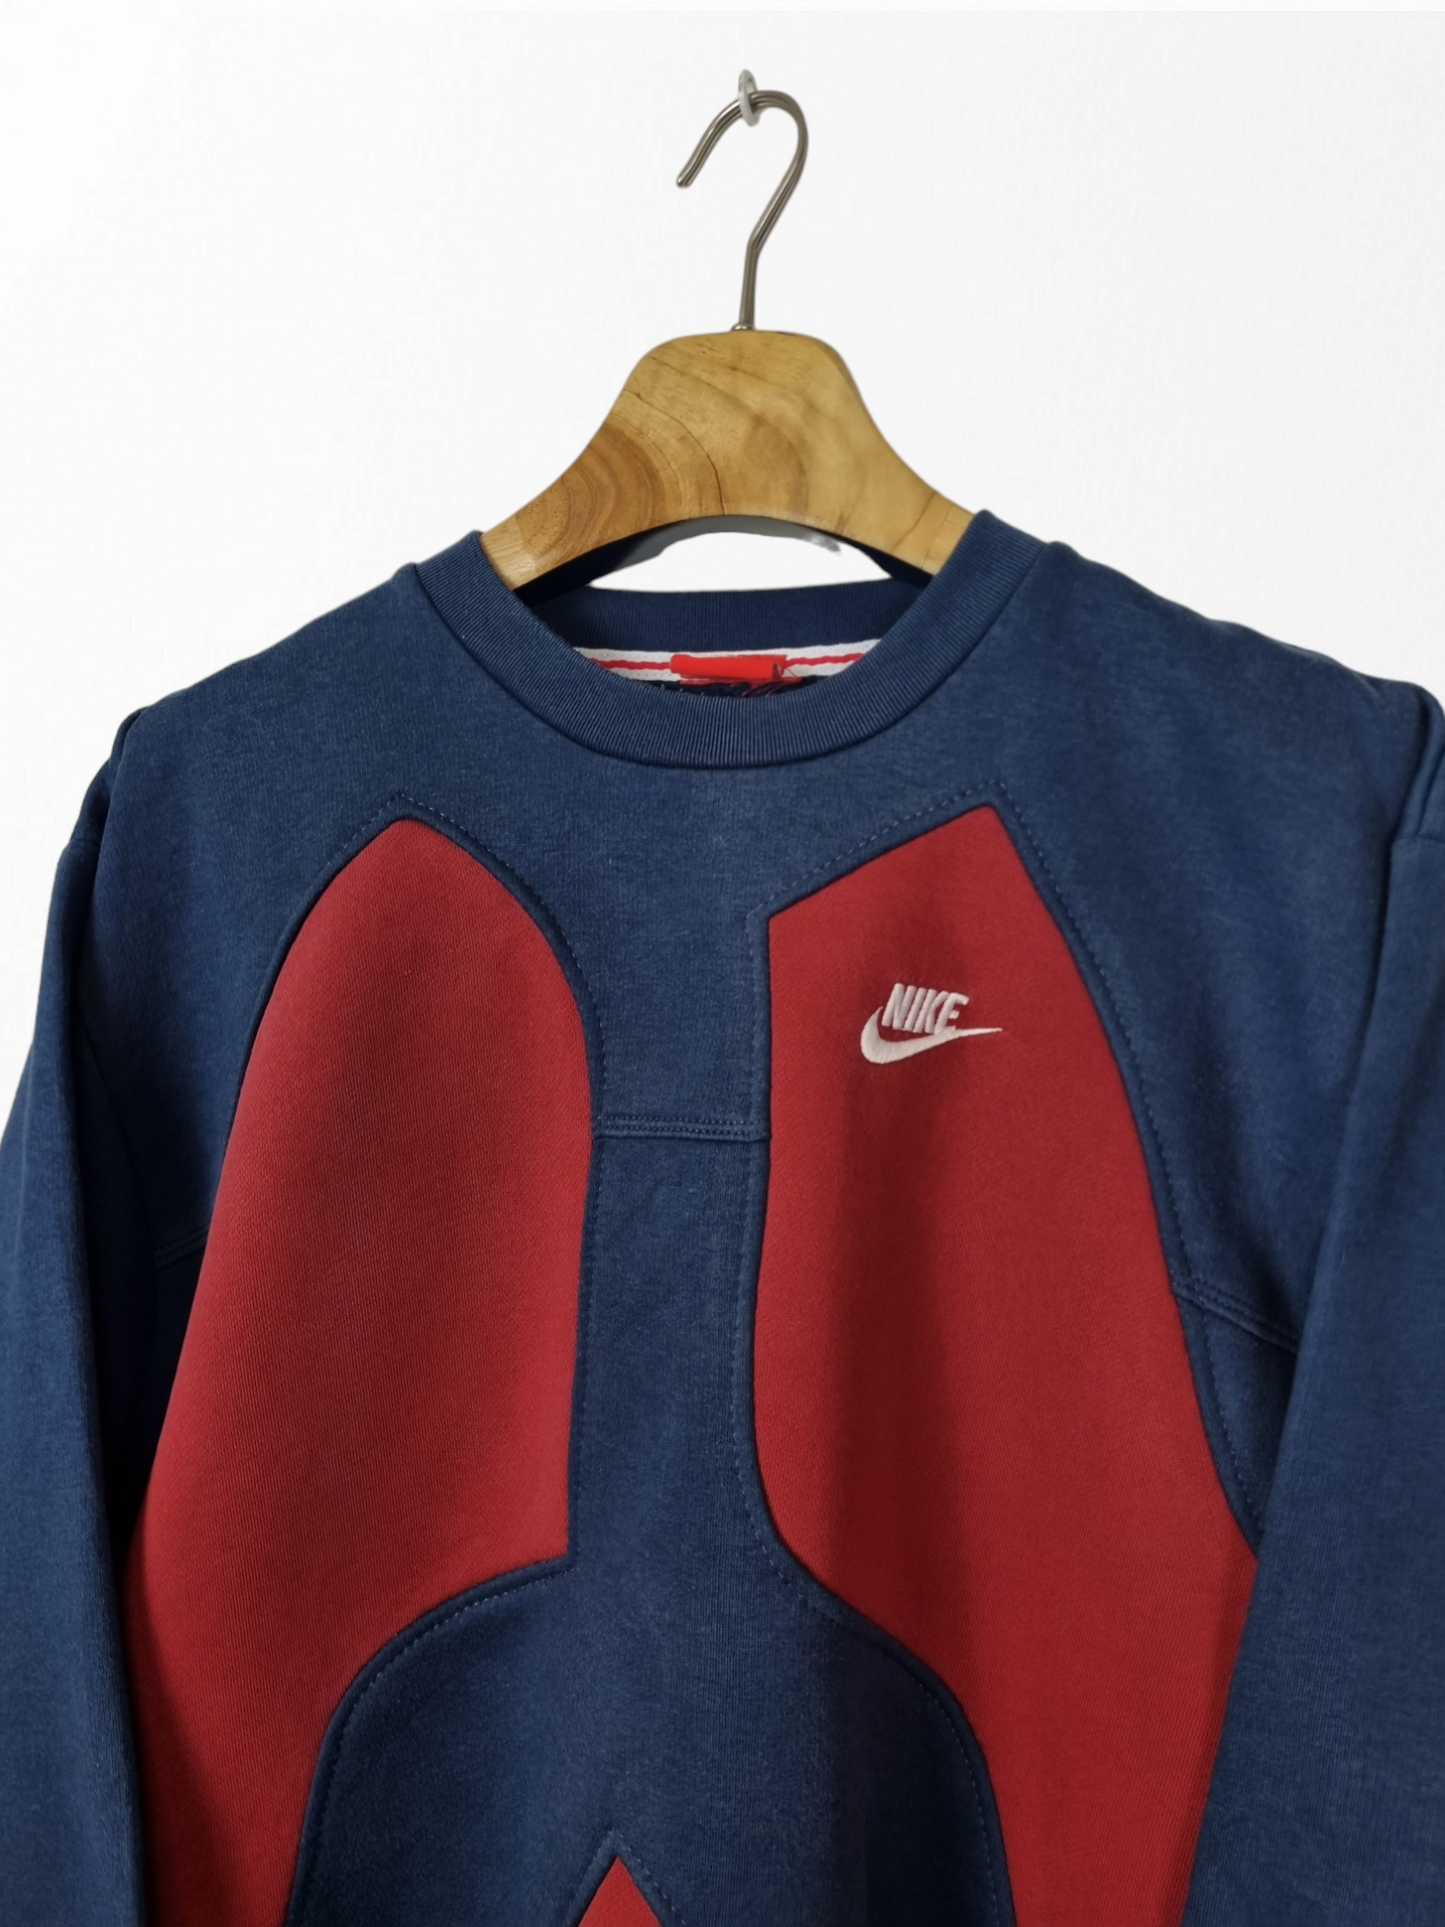 Nike chest logo sweater